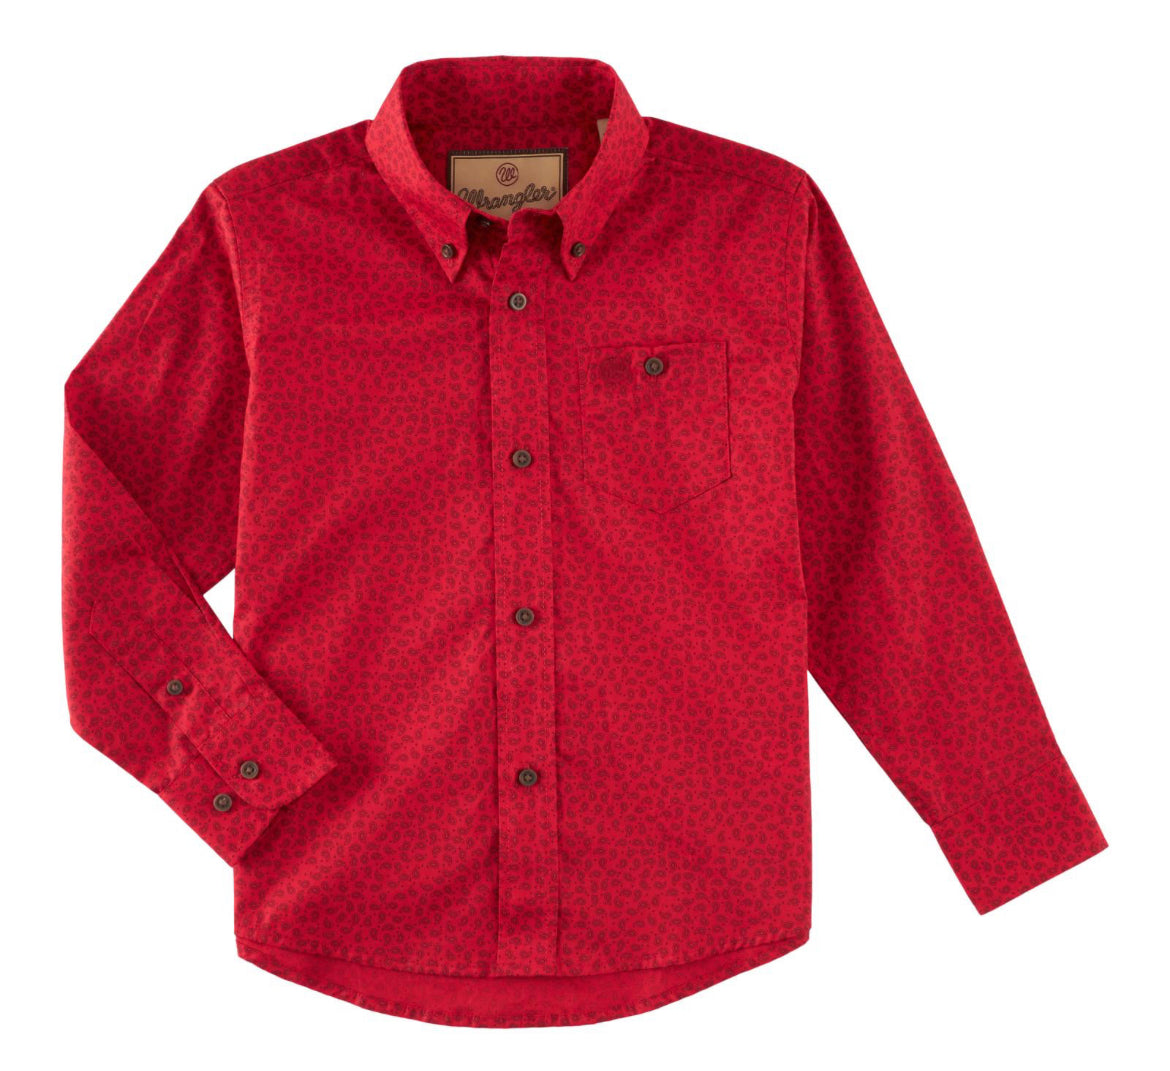 Boys Classic Long Sleeve Shirt - Red (8974)